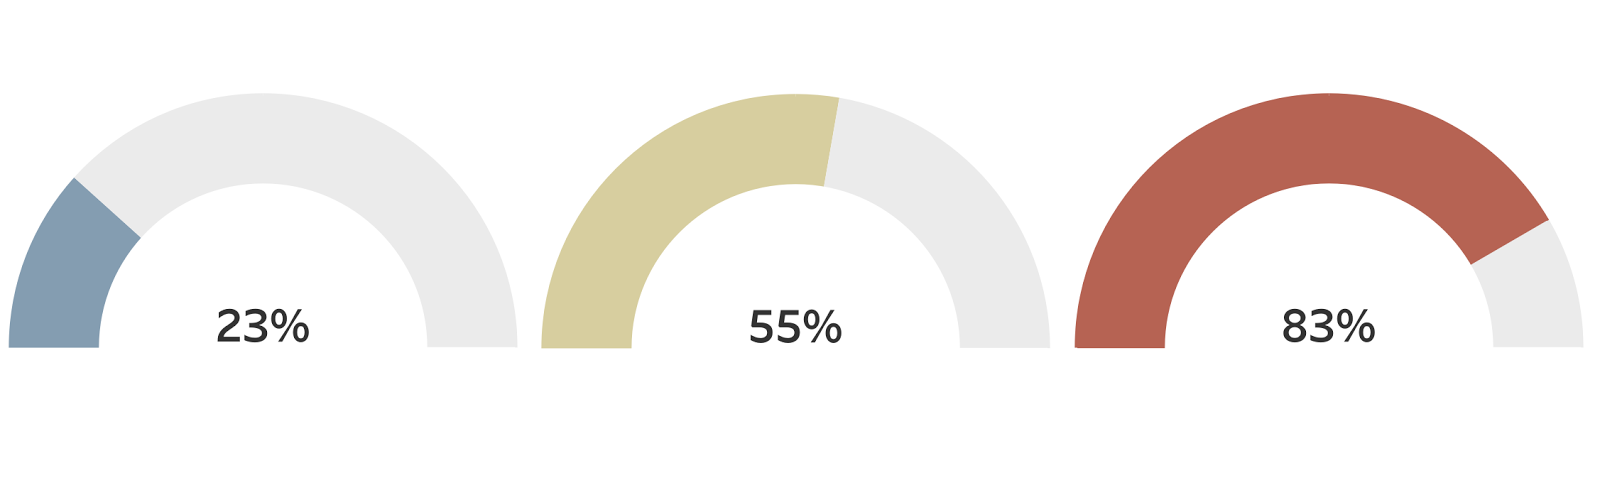 Tableau Show Percentage In Bar Chart